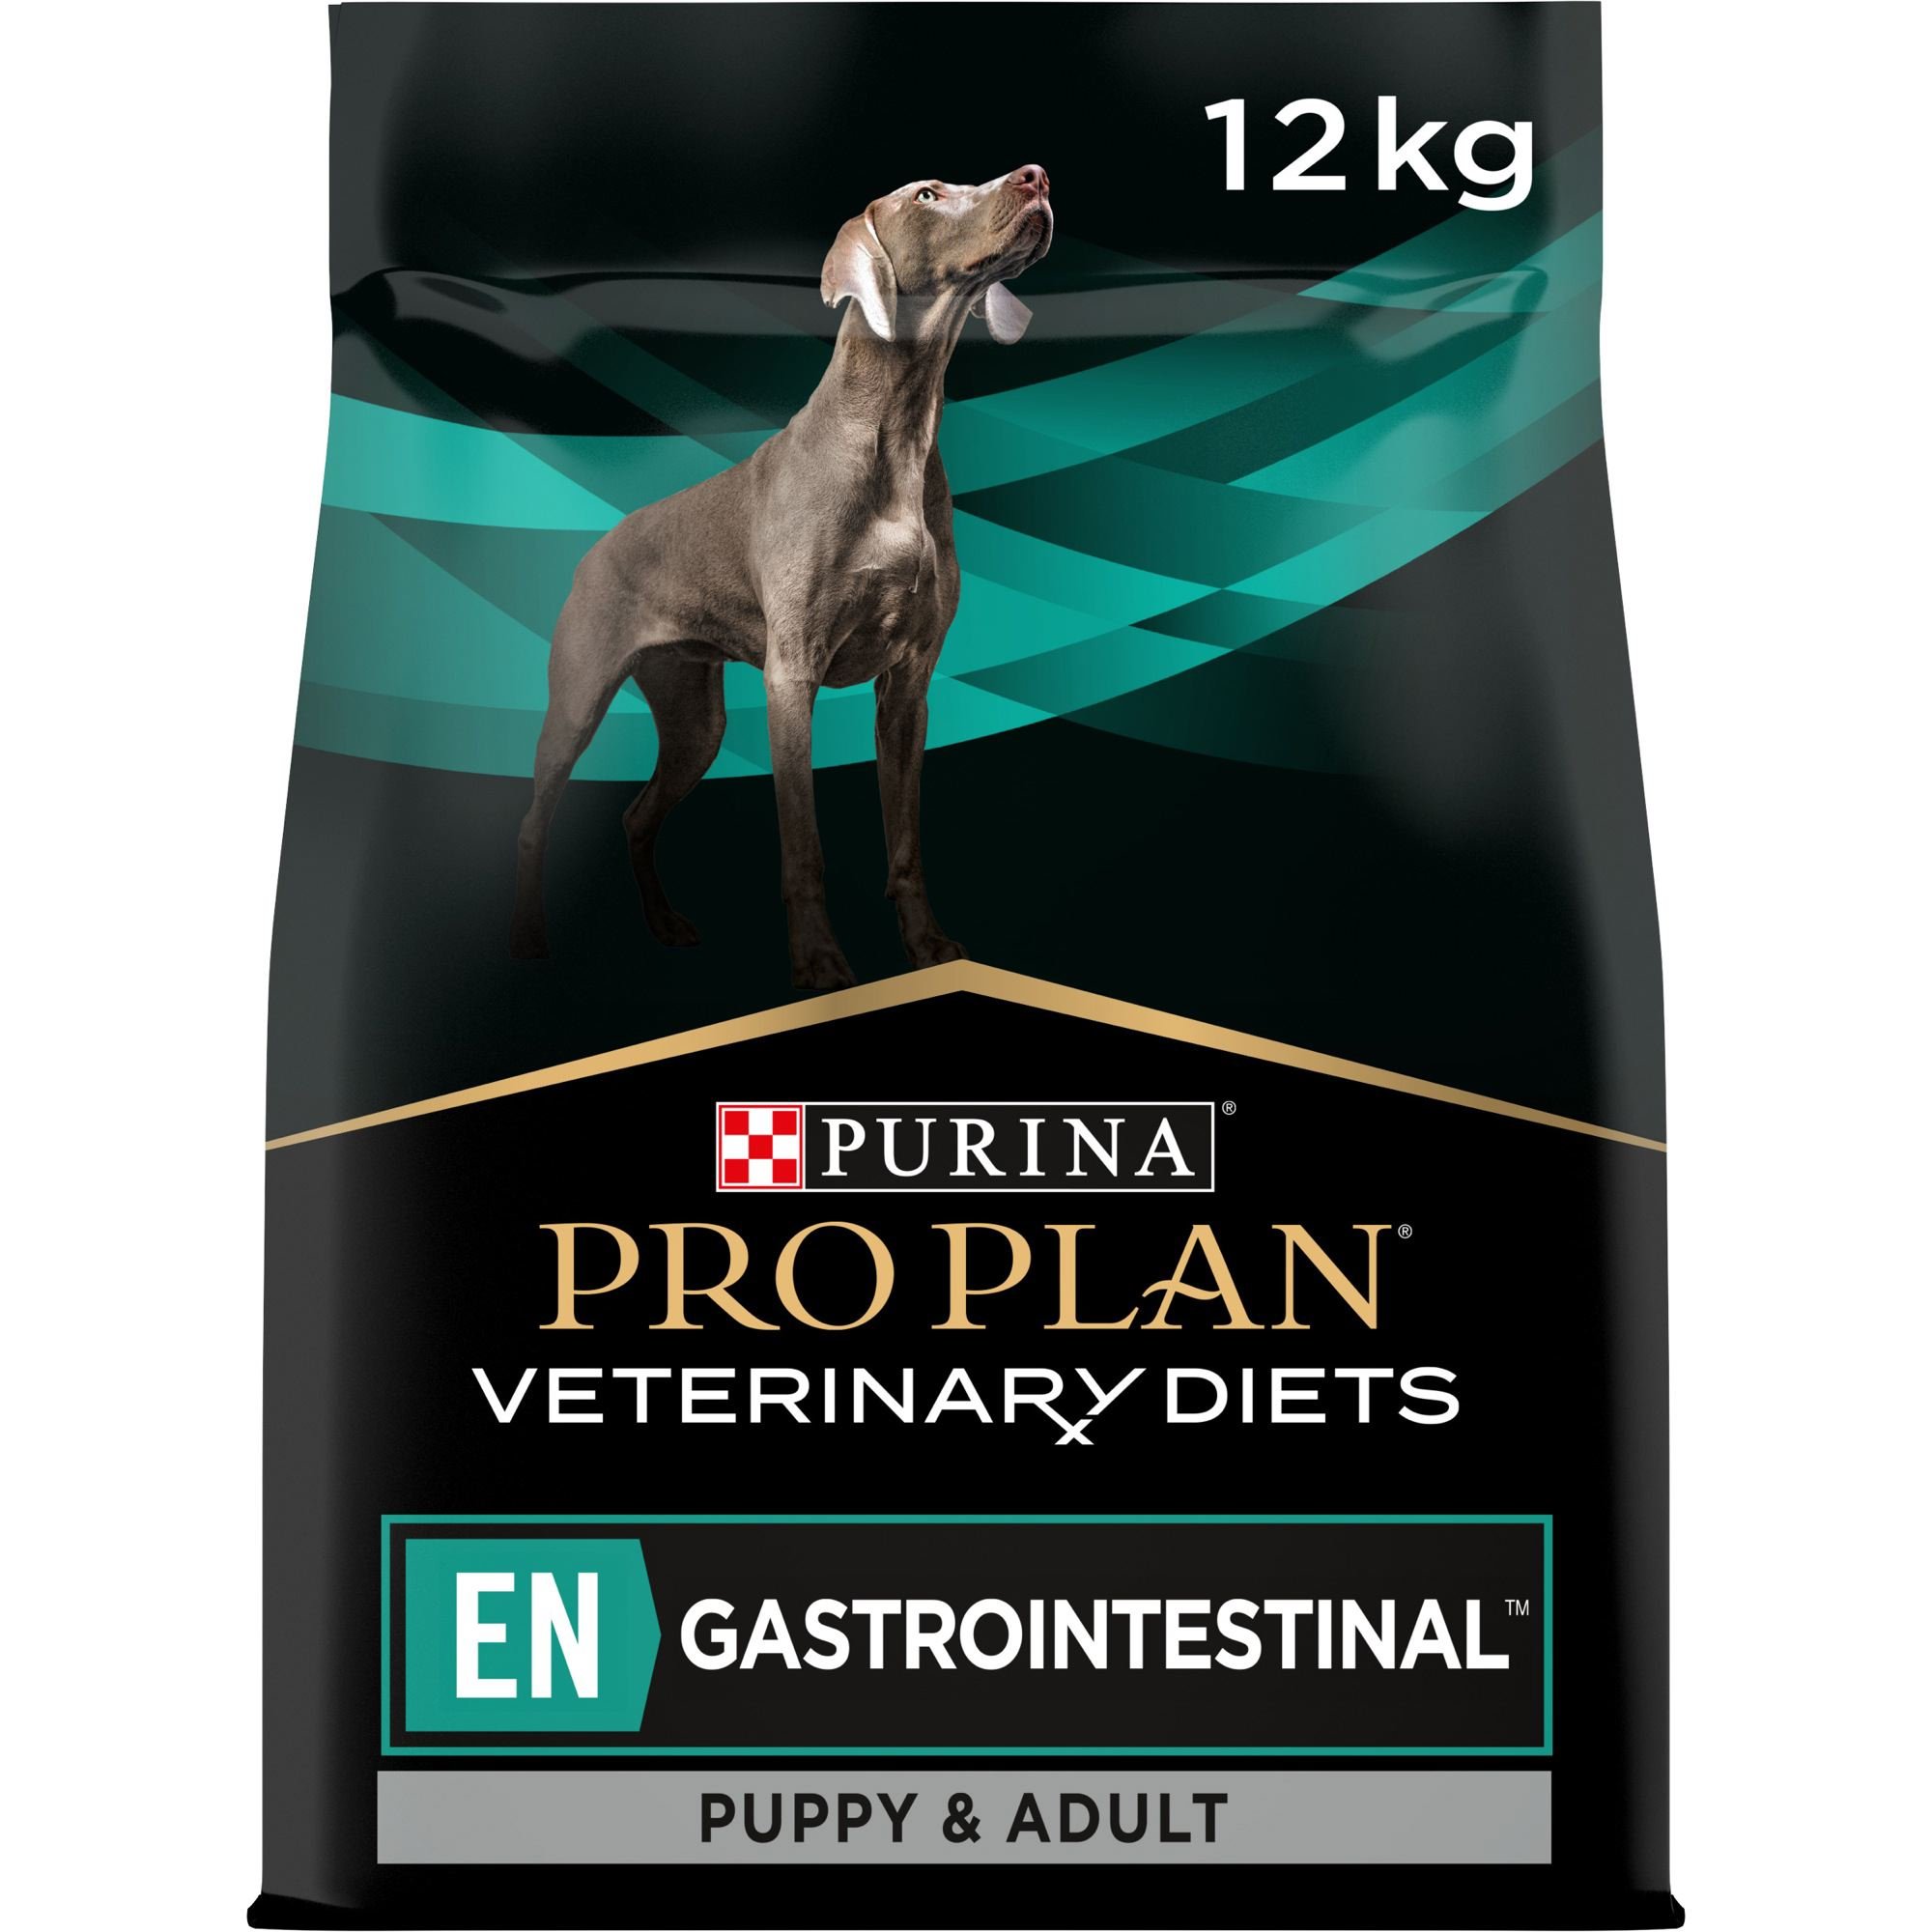 Сухой корм для собак при заболеваниях желудочно-кишечного тракта Purina Pro Plan Veterinary Diets EN Gastrointestinal, 12 кг - фото 1